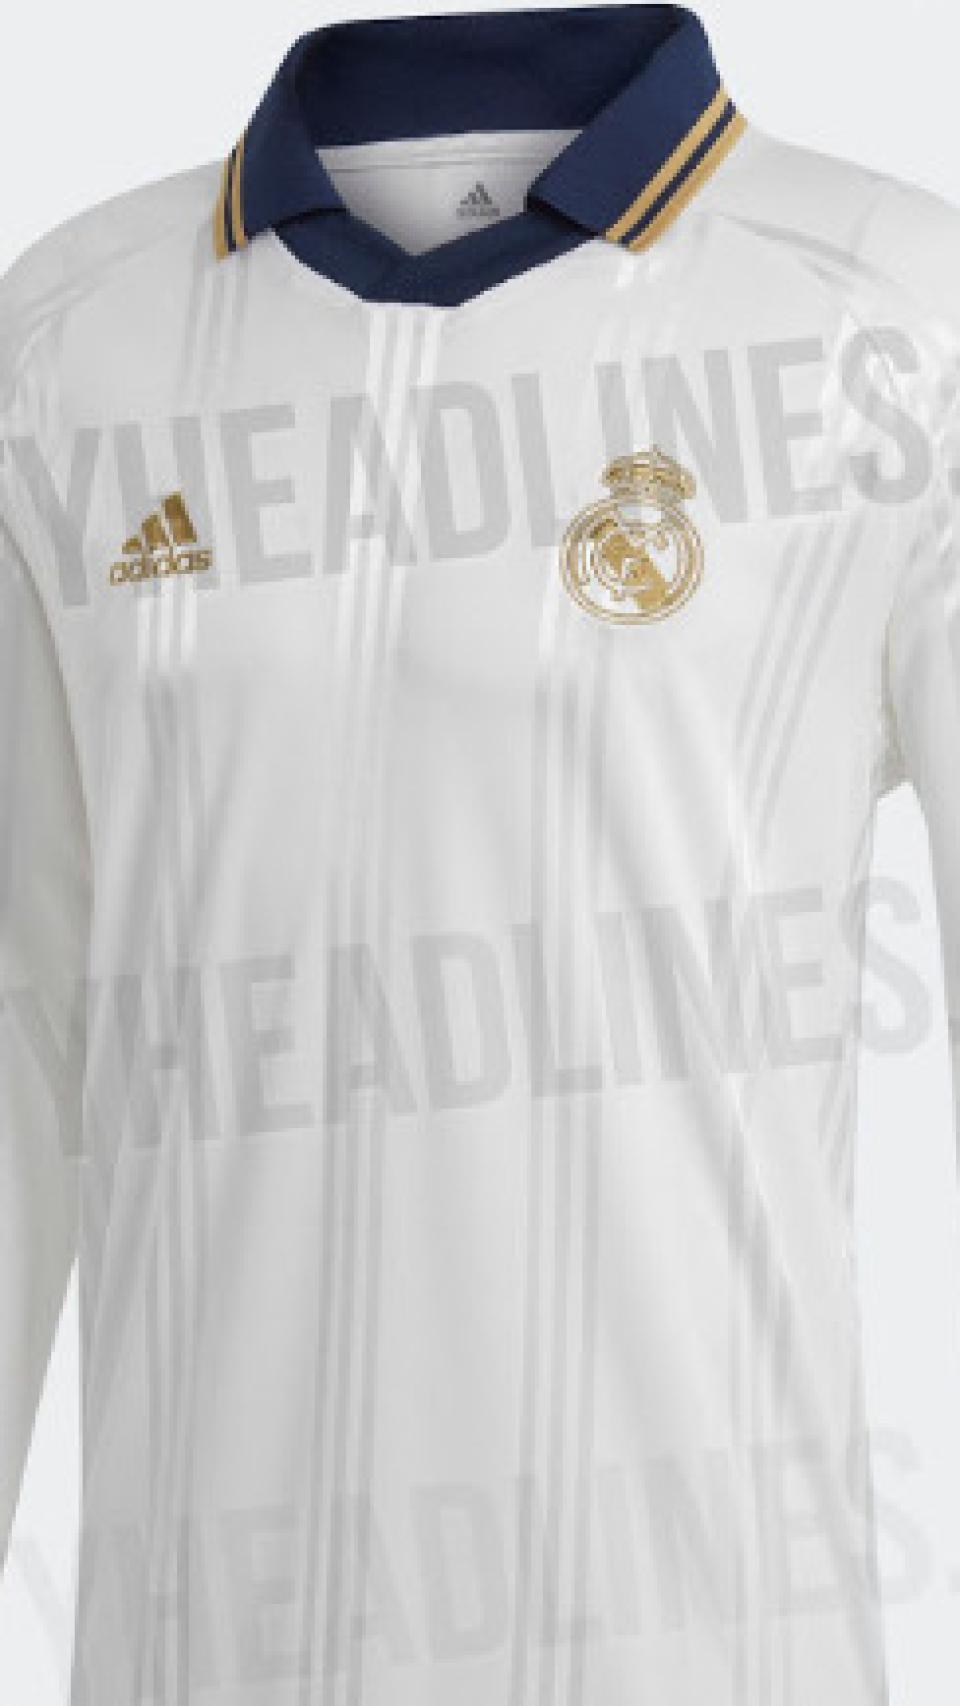 Camiseta retro del Real Madrid para la temporada 2019/2020